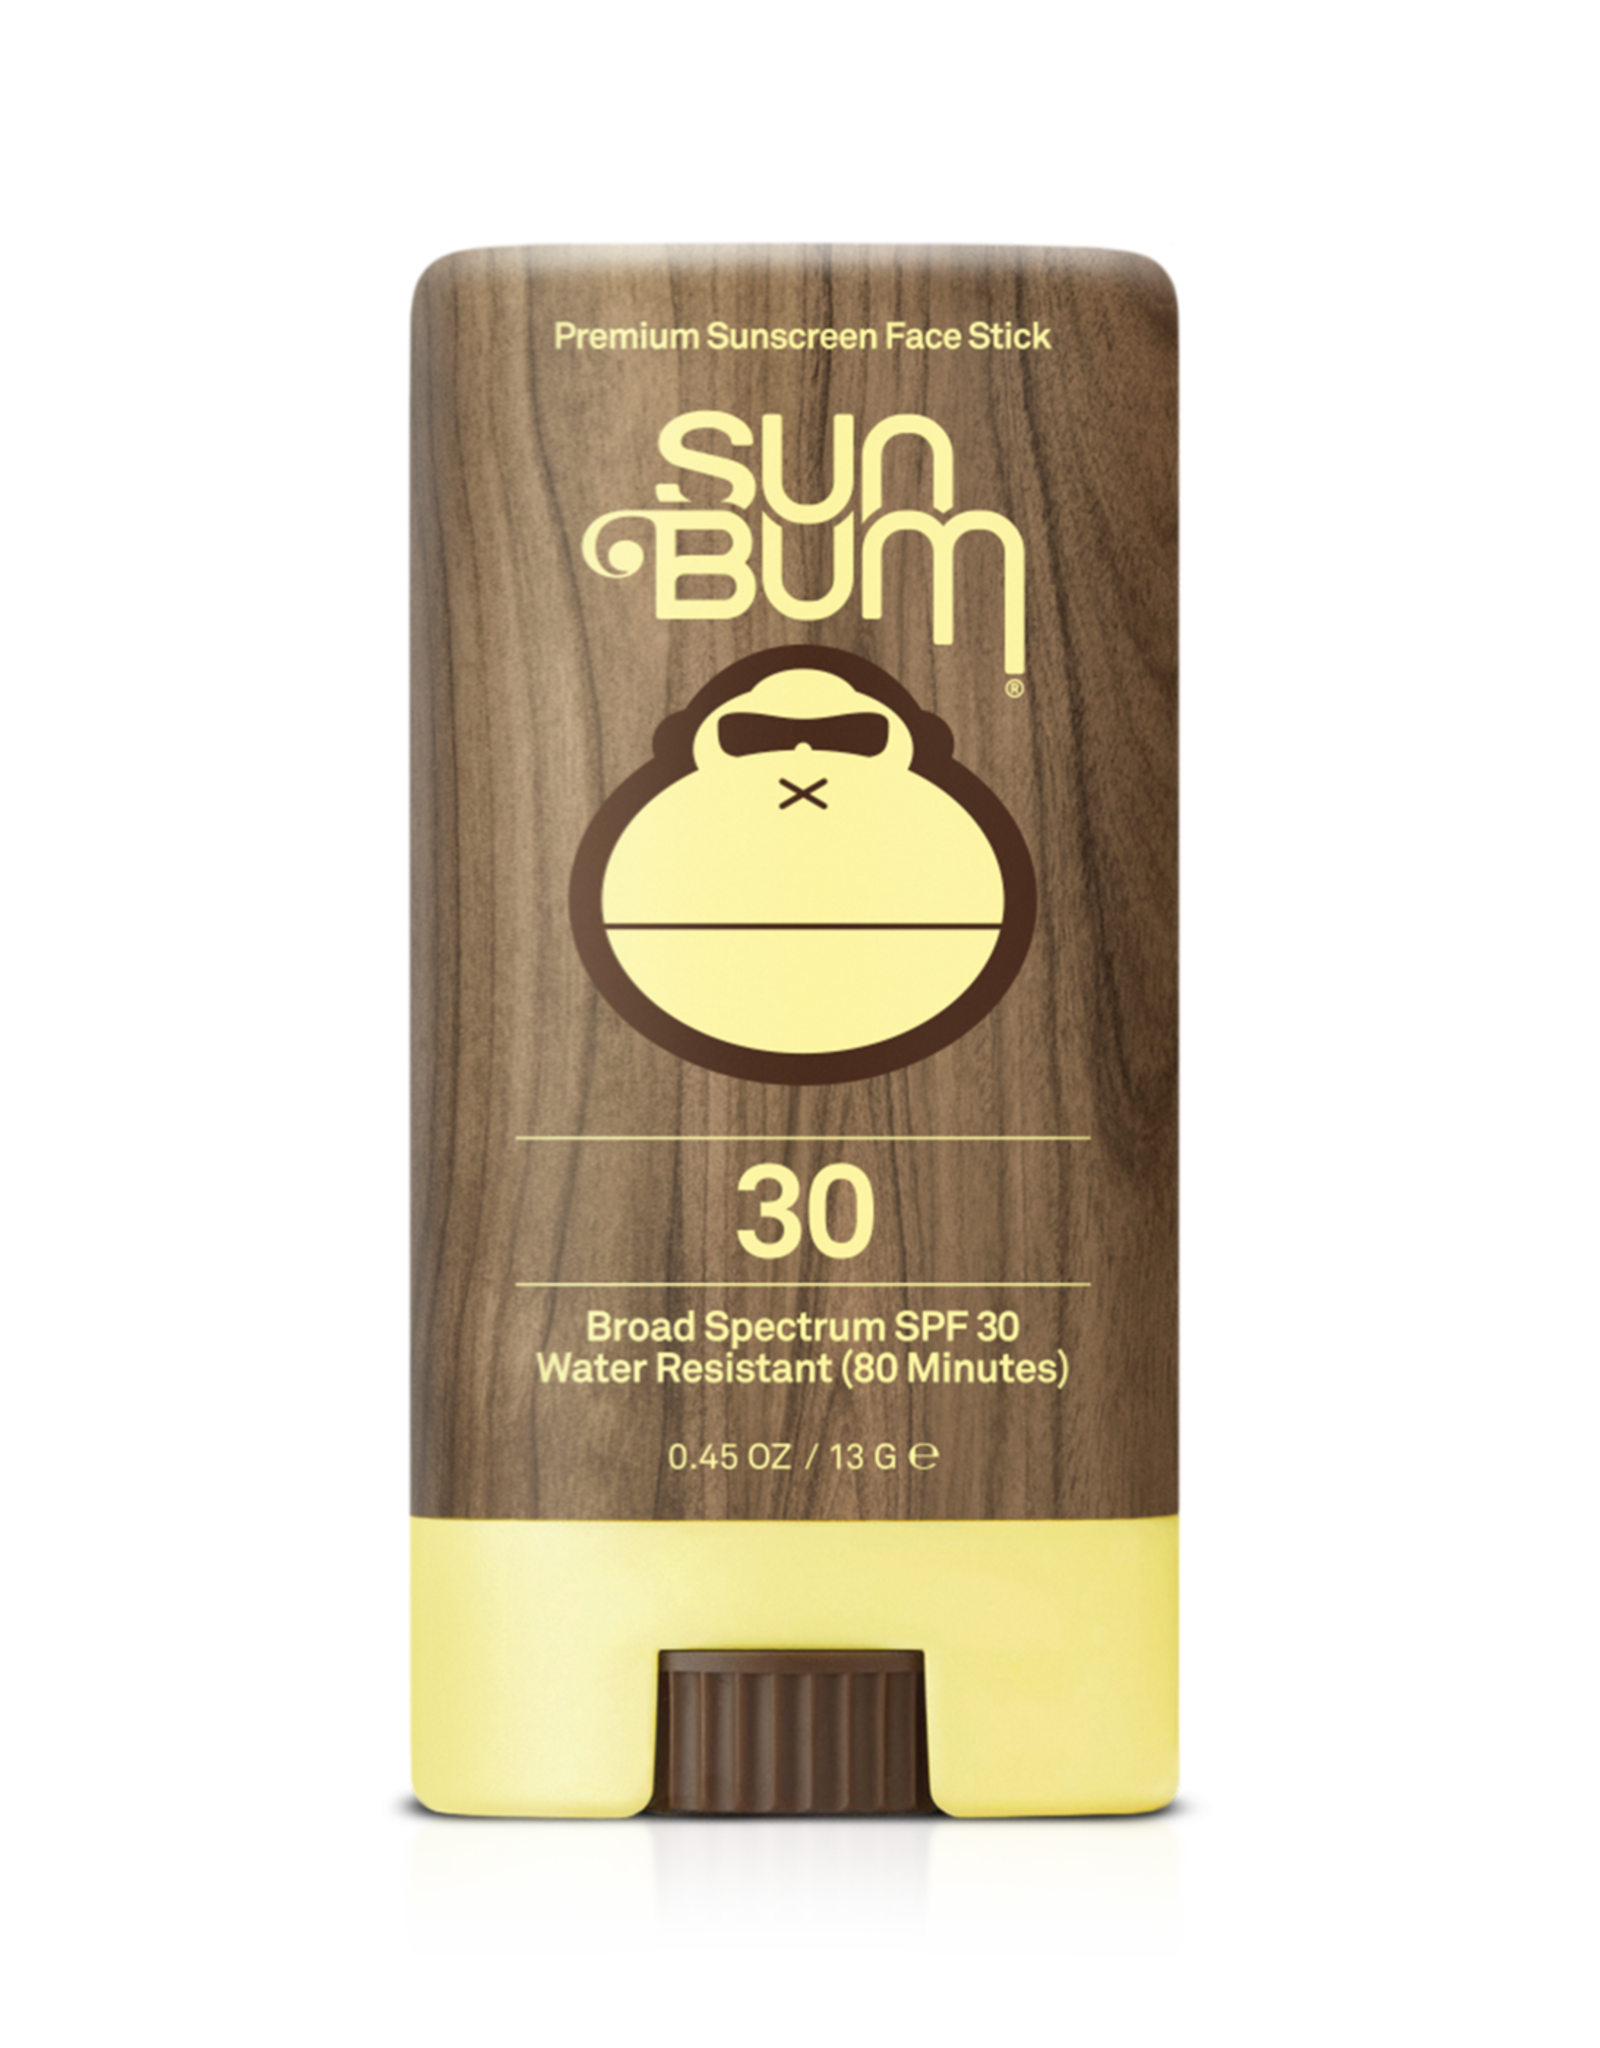 SUN BUM Face Stick SPF 30